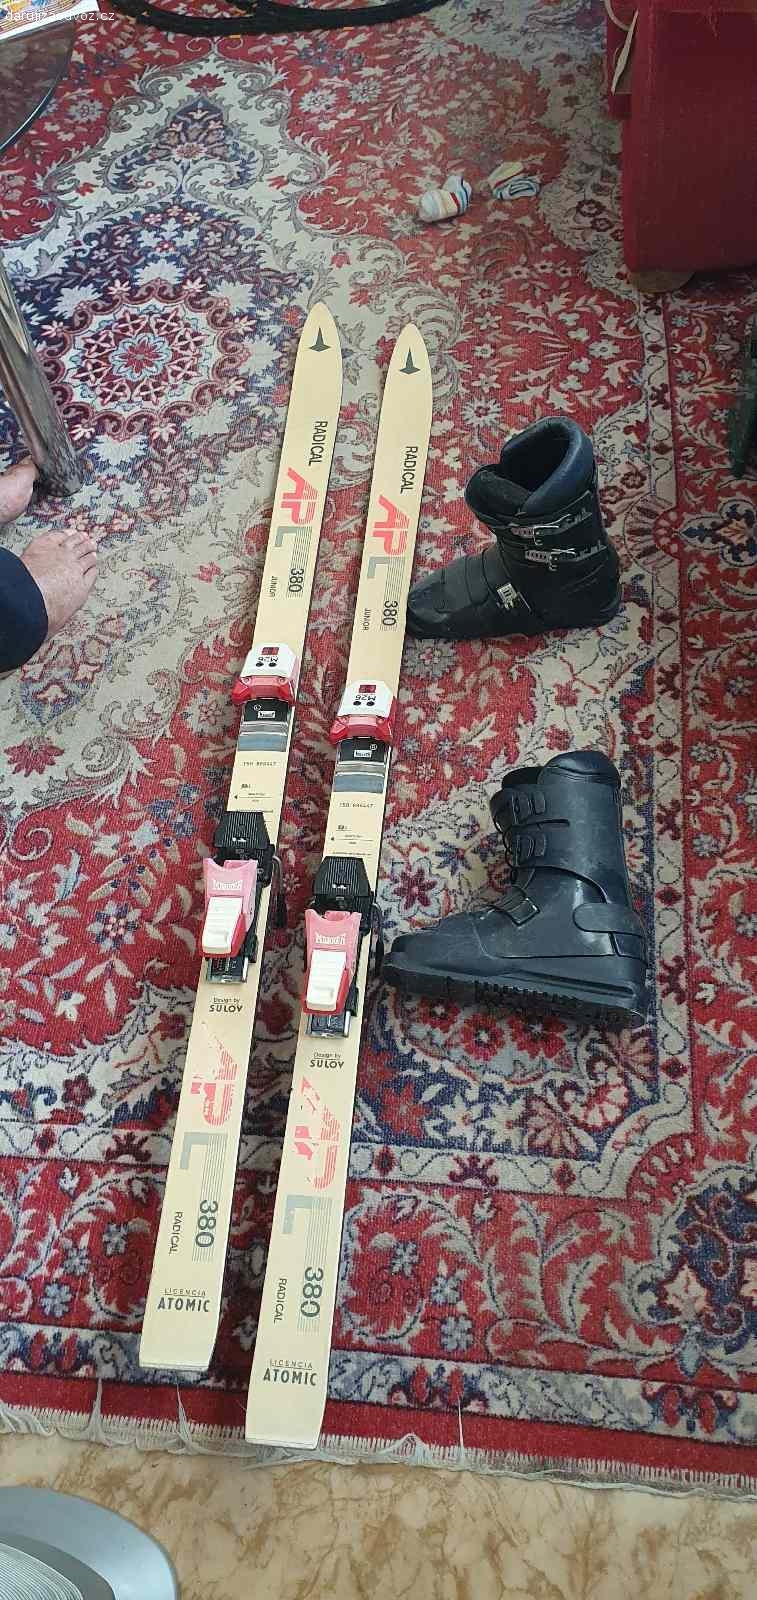 Staré lyže, boty 36, lyže cca 145cm. Staré, používané.
Boty zn. BOTAS.